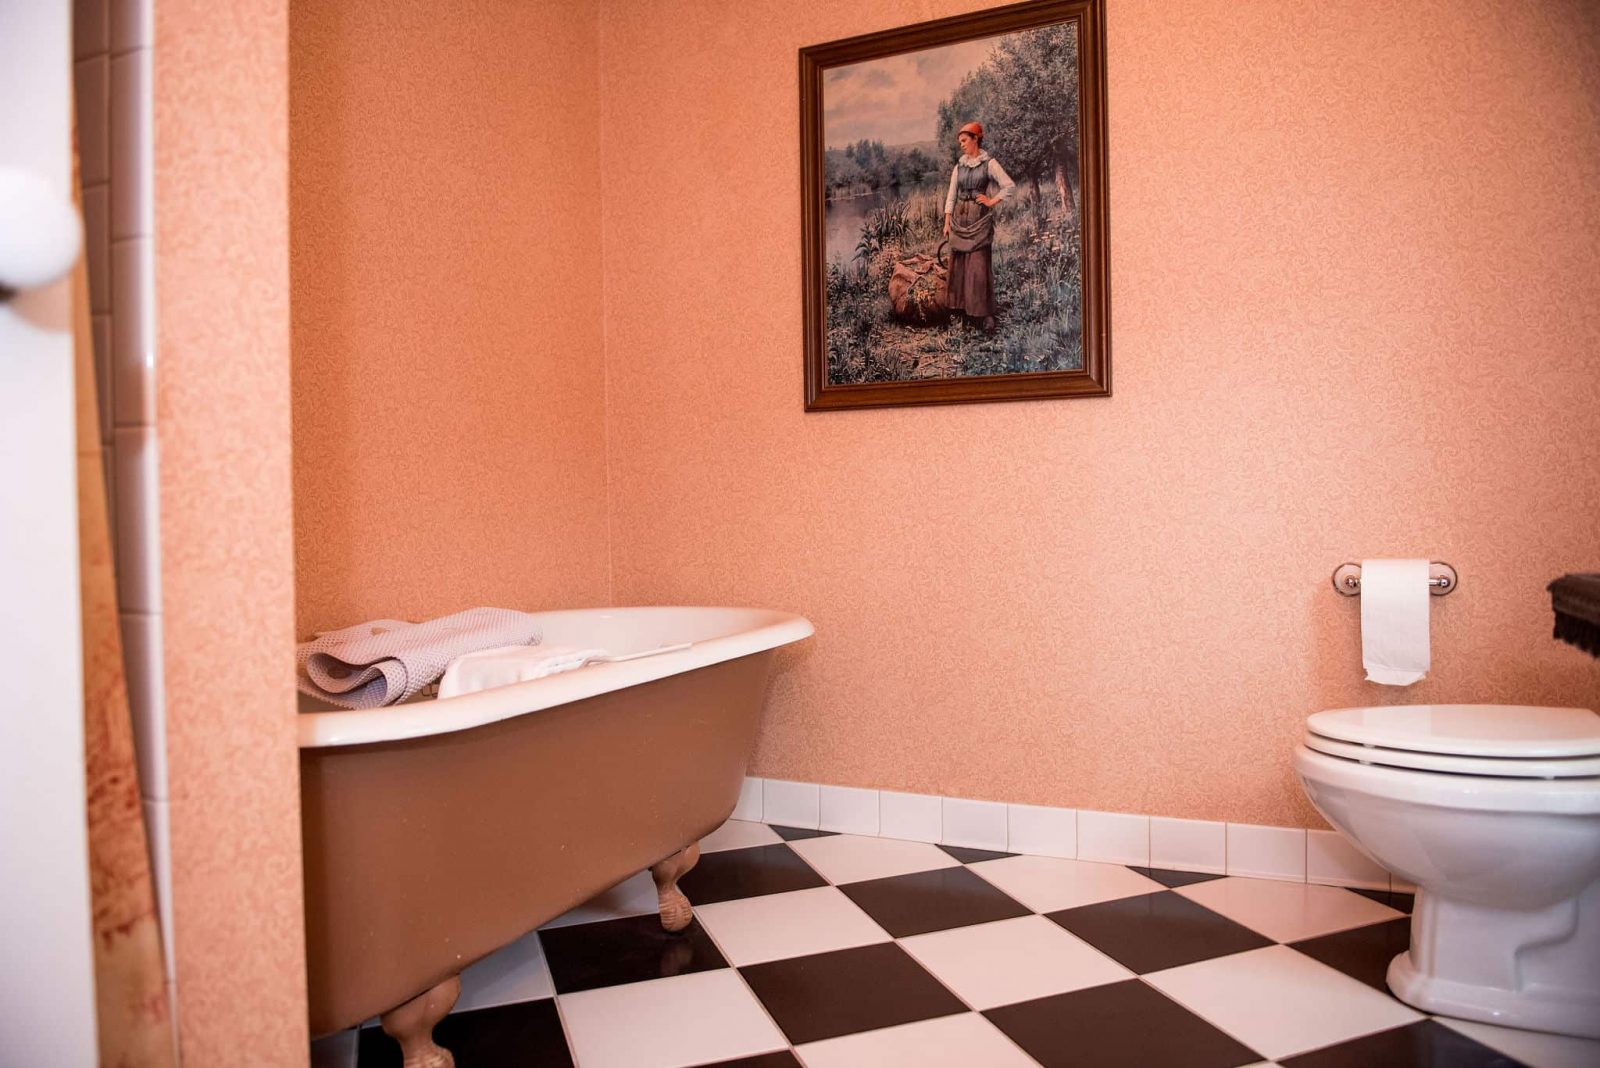 Room 32 bathroom interior facing the claw-foot tub